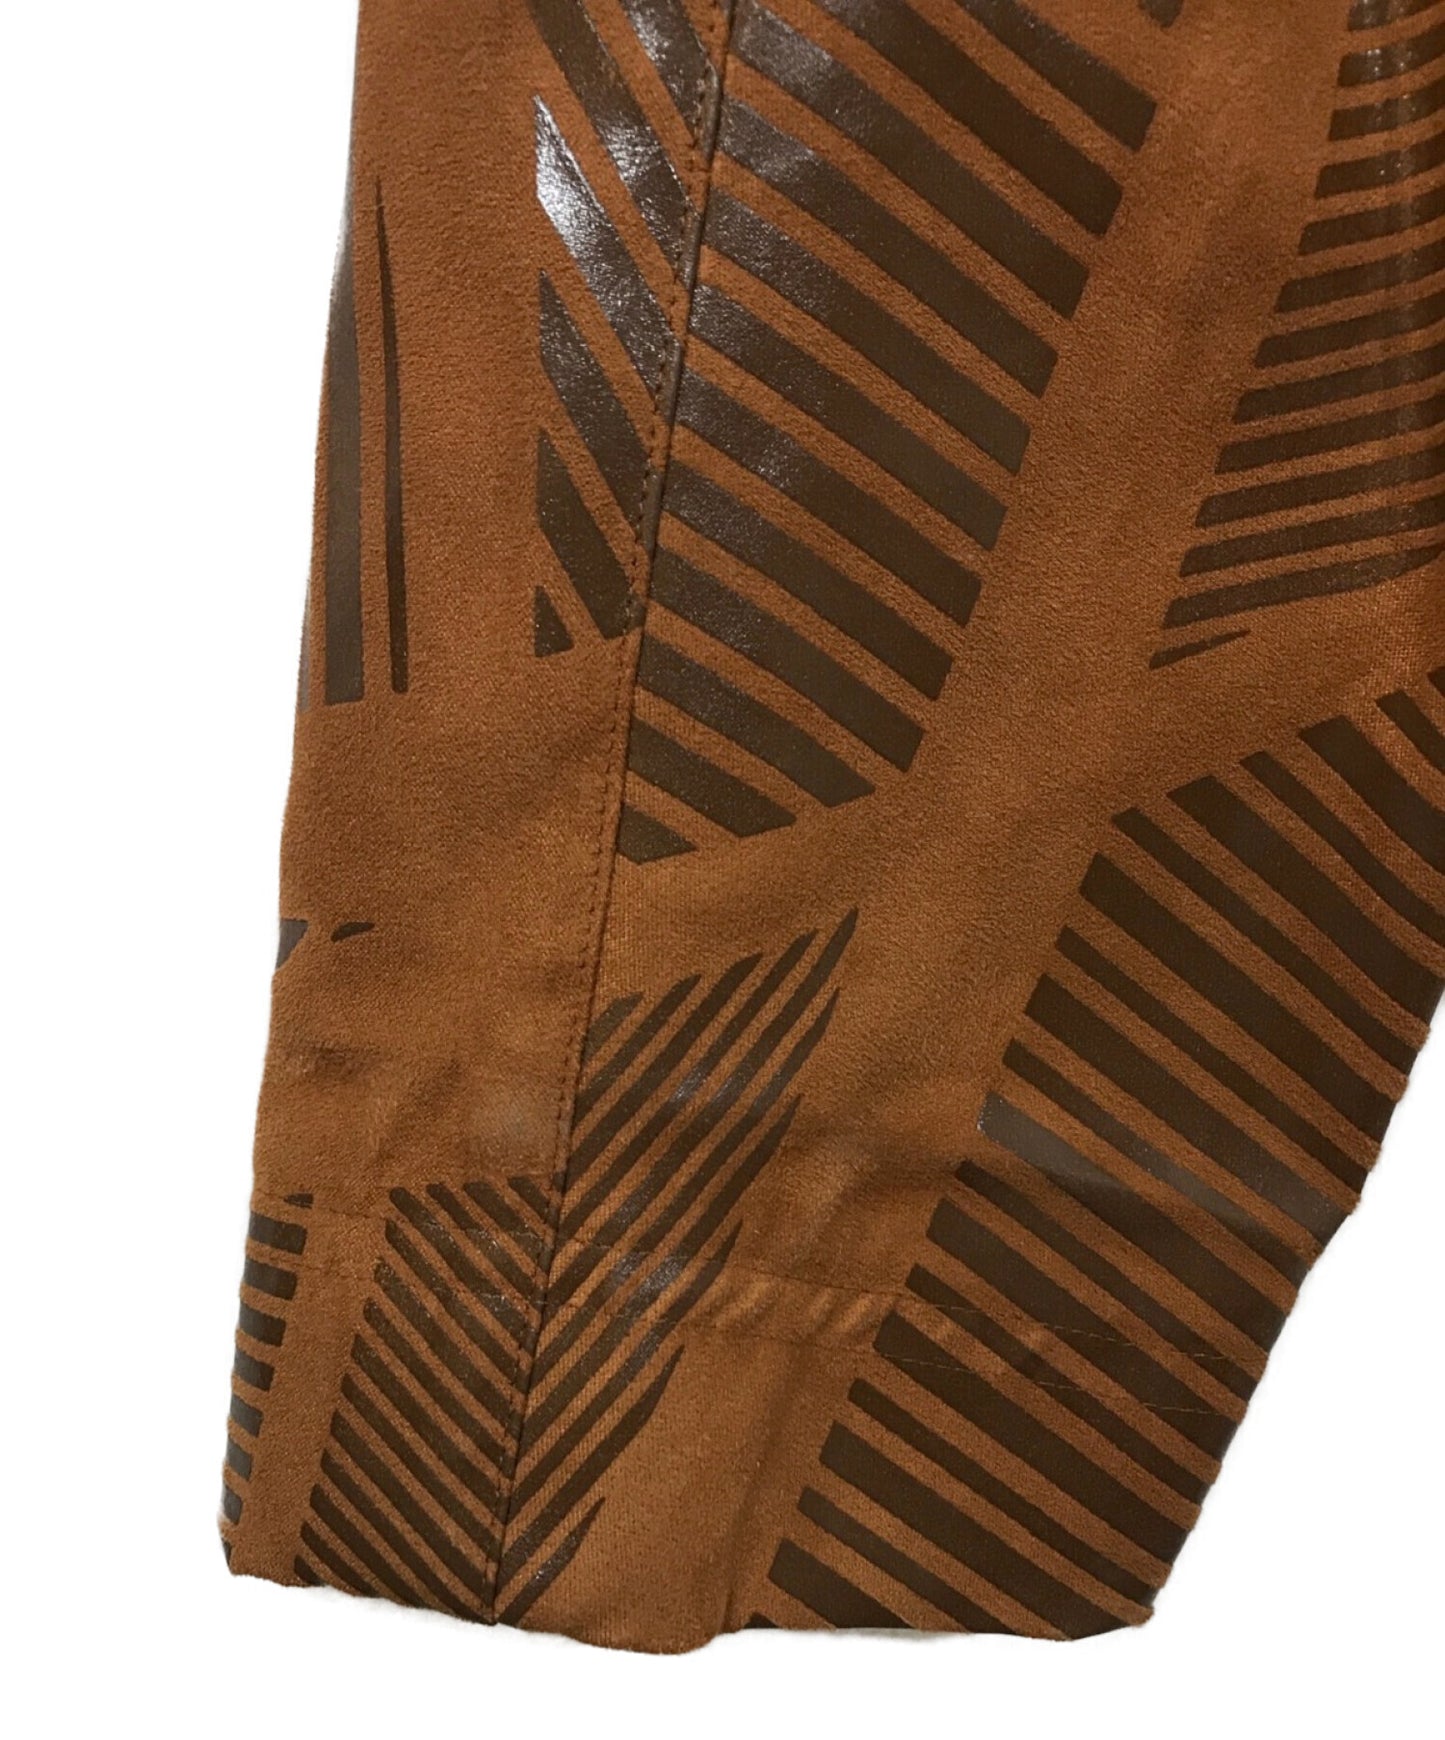 Issey Miyake 기하학적 패턴 재킷 IM44FC506